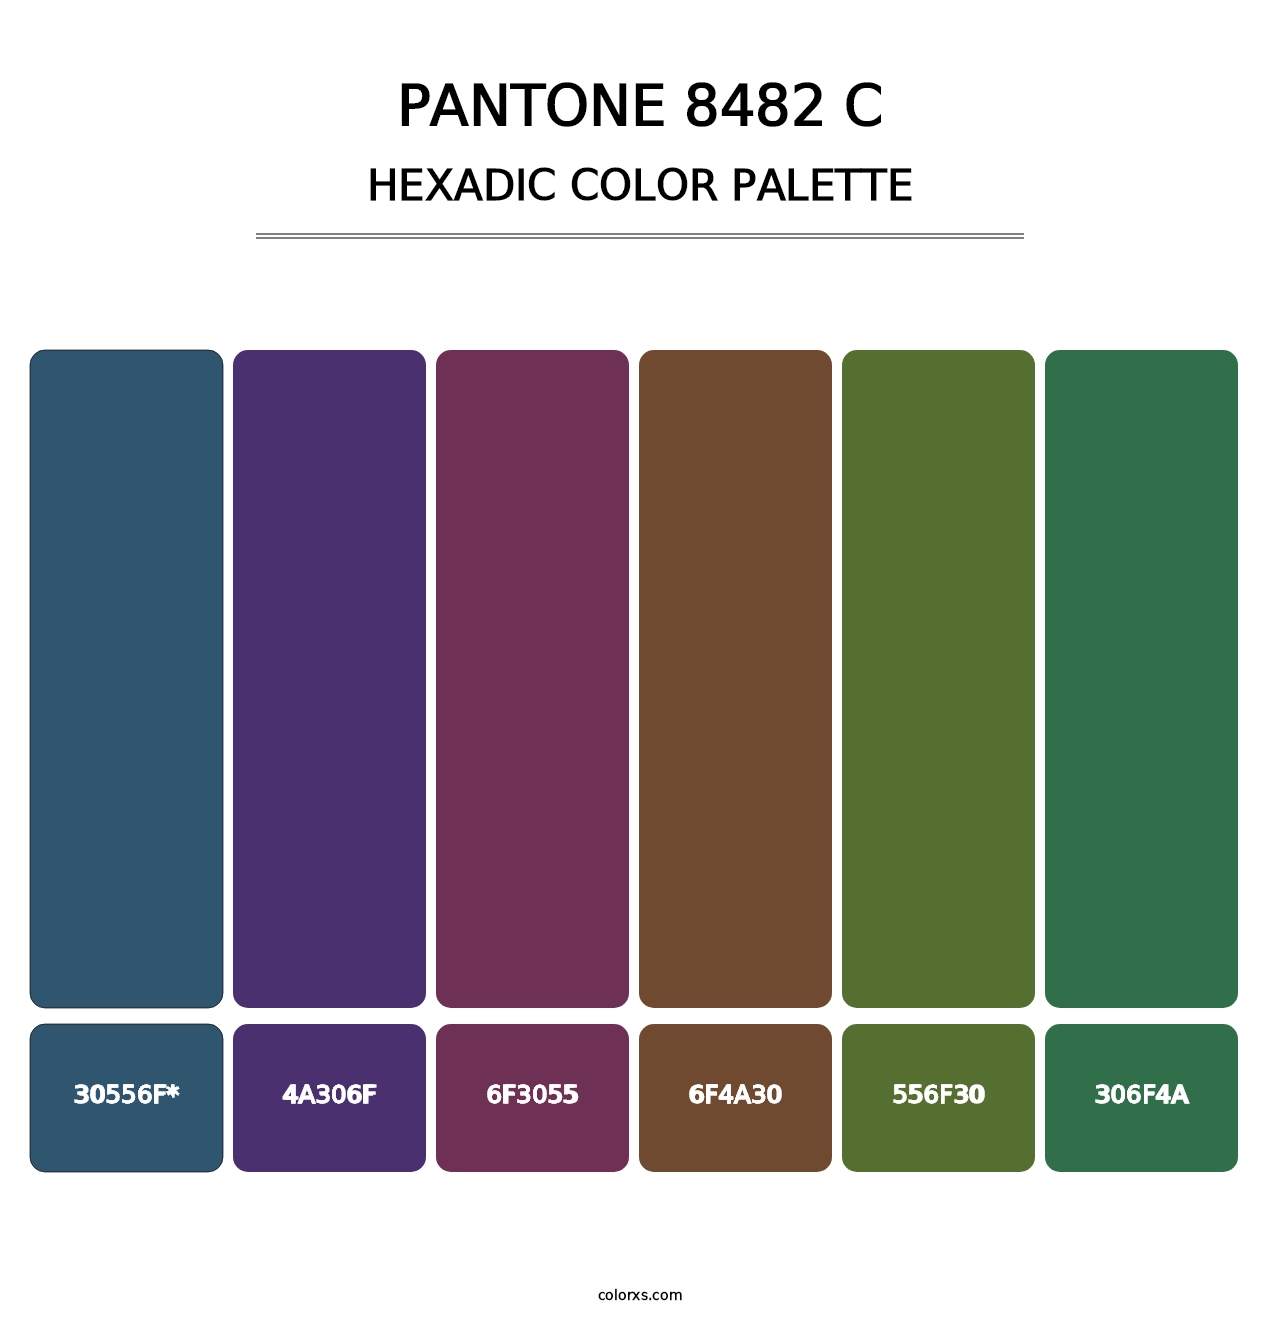 PANTONE 8482 C - Hexadic Color Palette